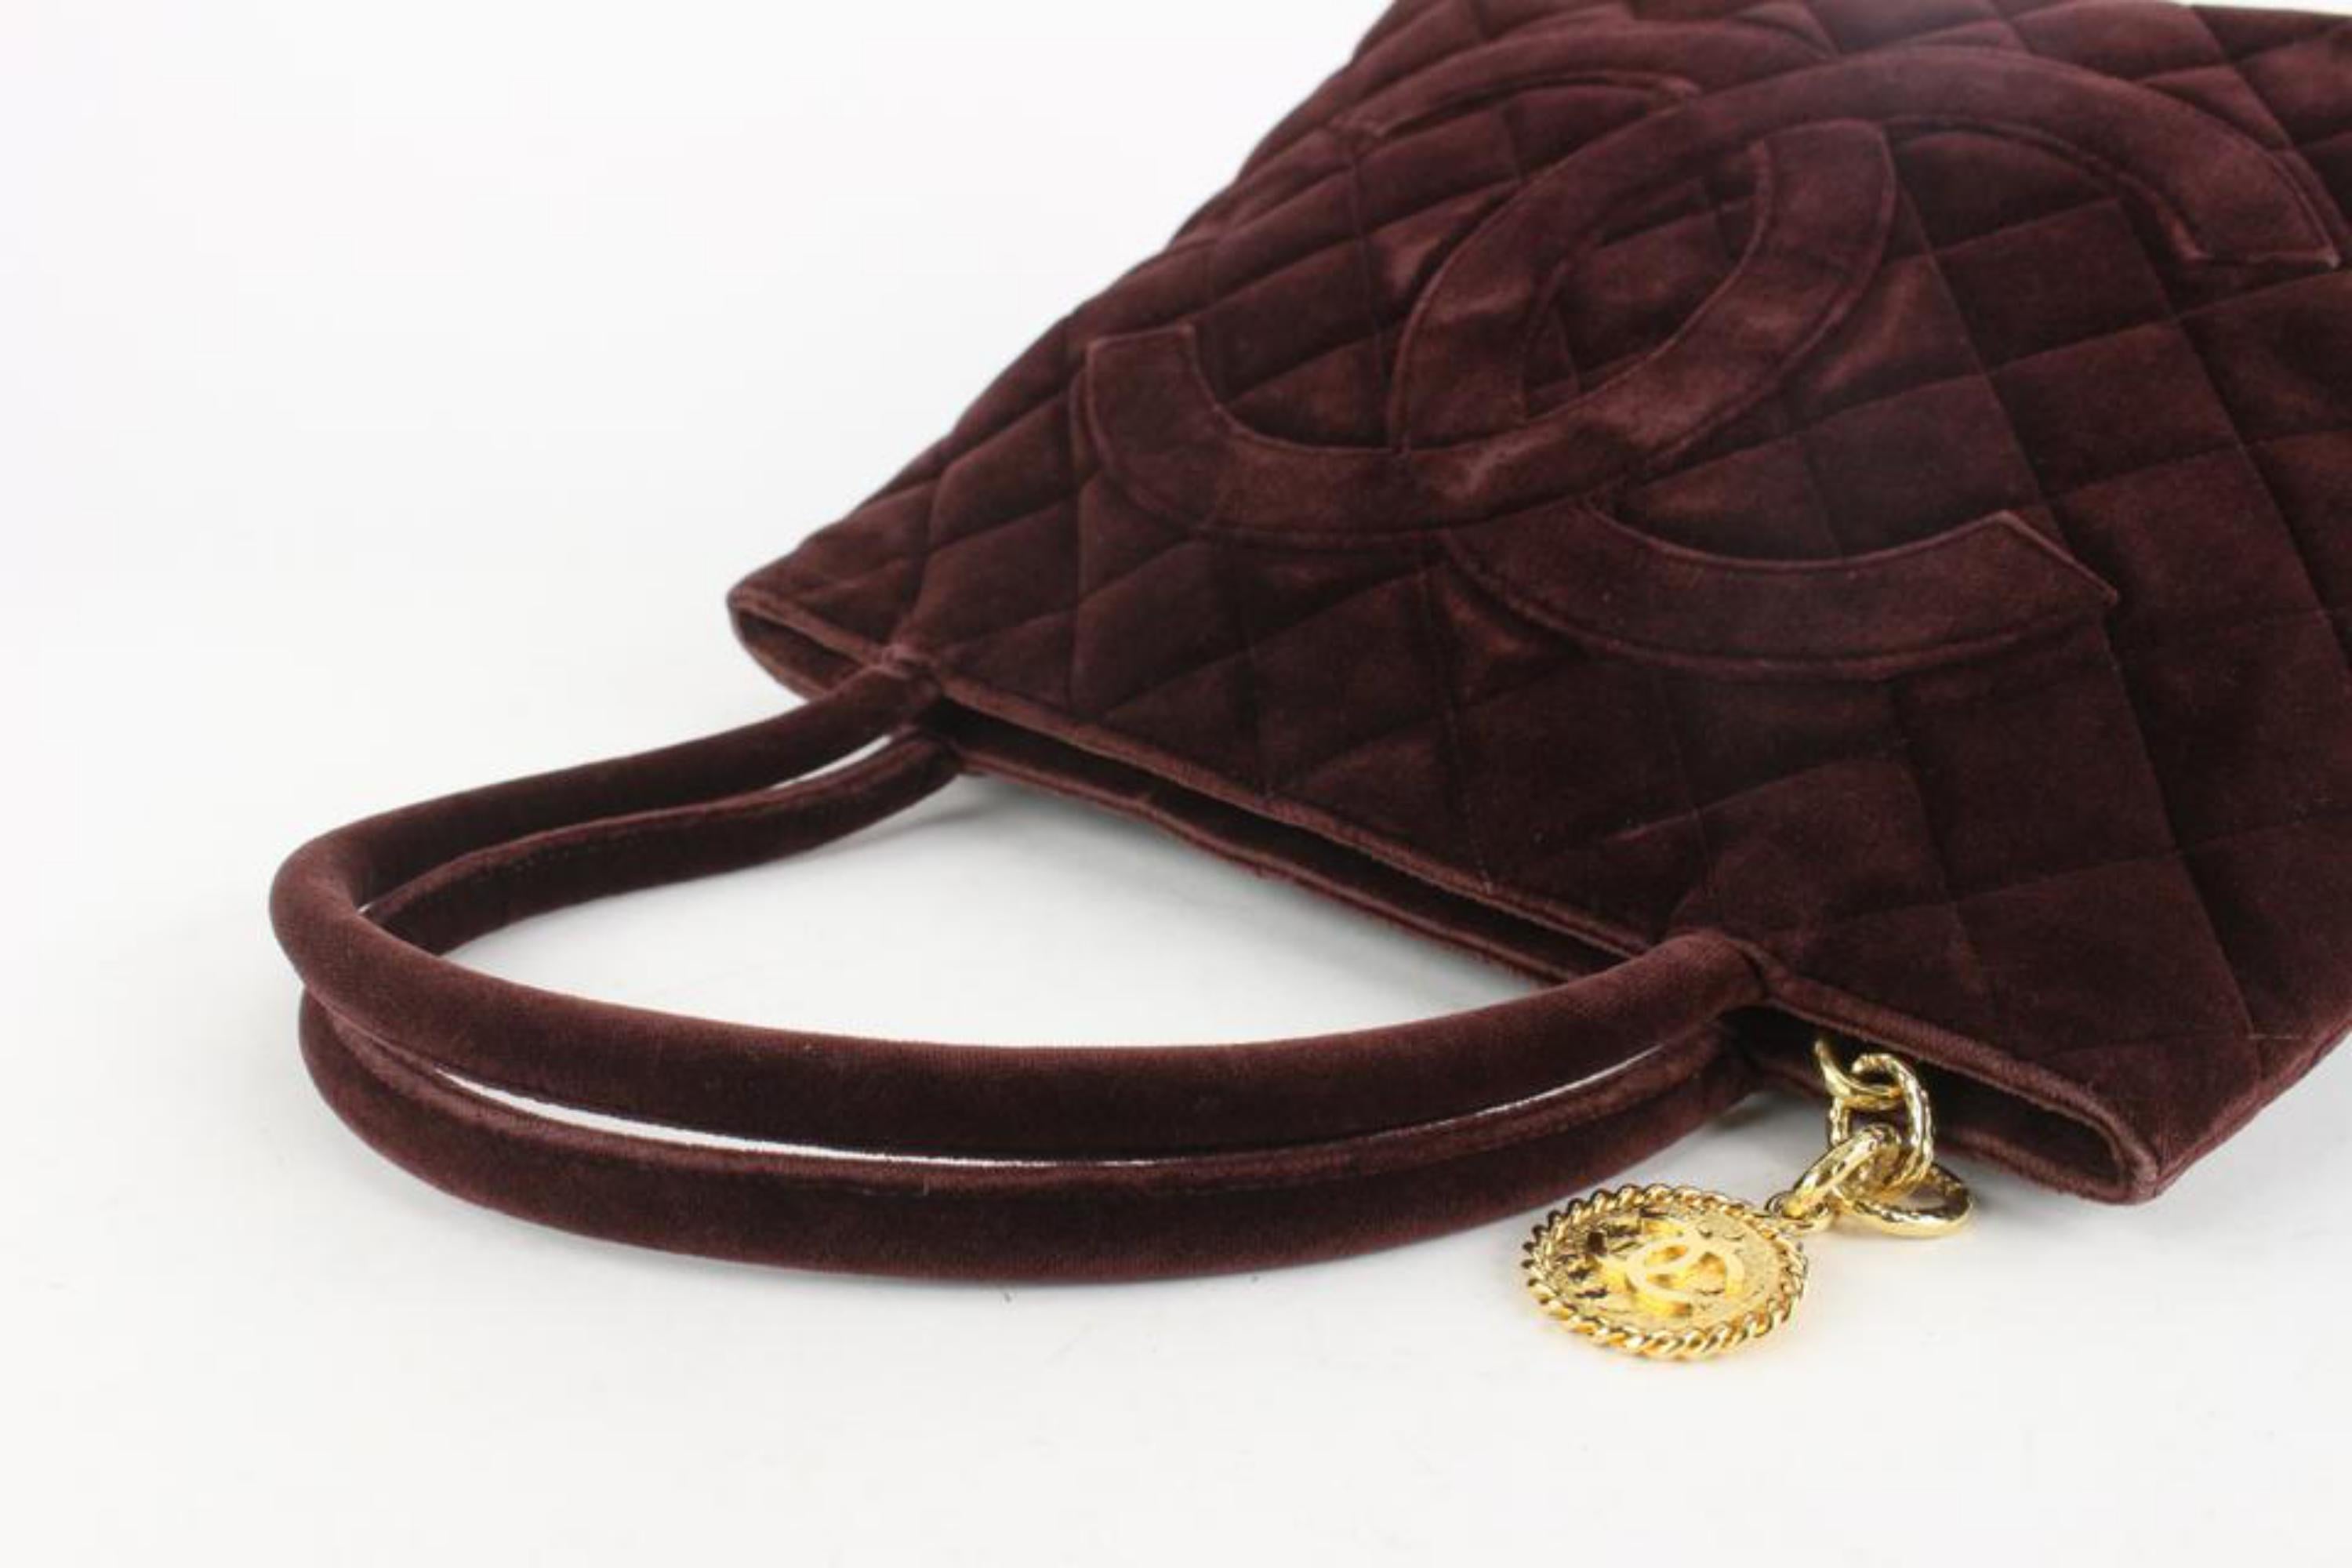 Chanel Dark Brown Quilted Velvet Medallion Zip Tote Bag GHW 115c7 For Sale 1